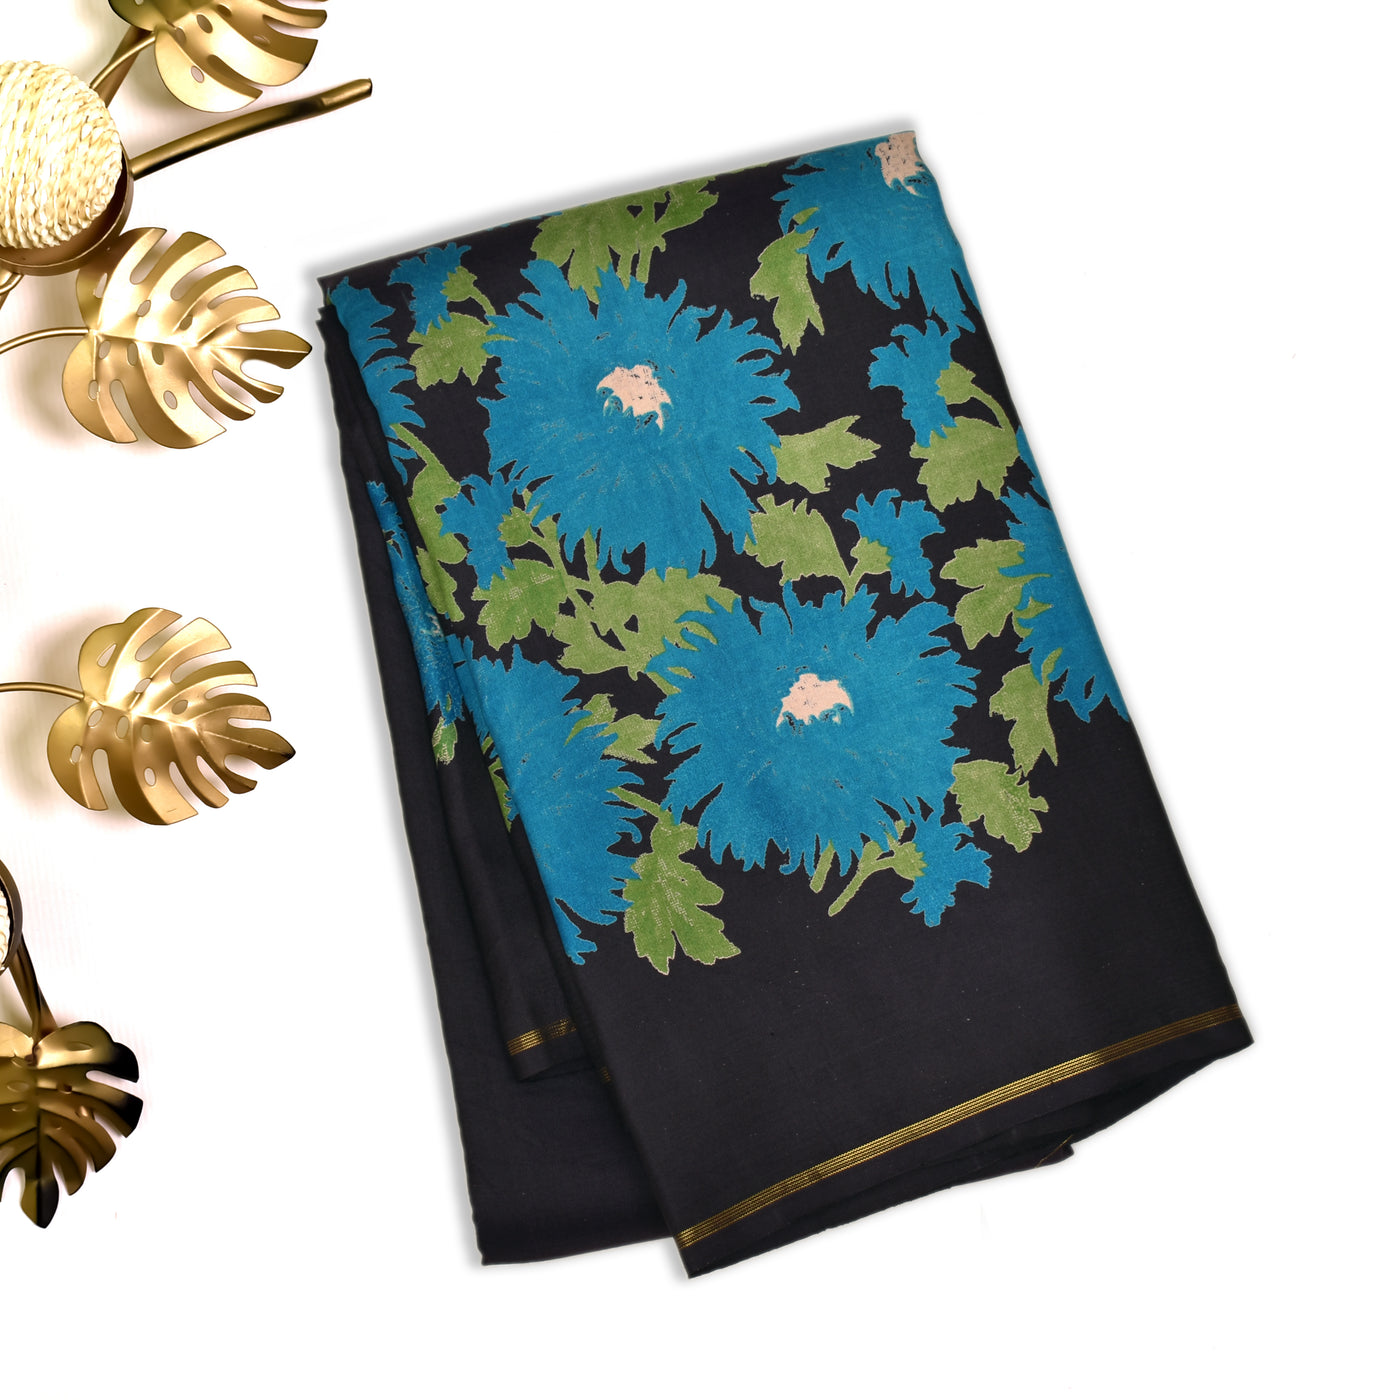 Black Printed Kanchi Silk Saree with Floral Printed Design